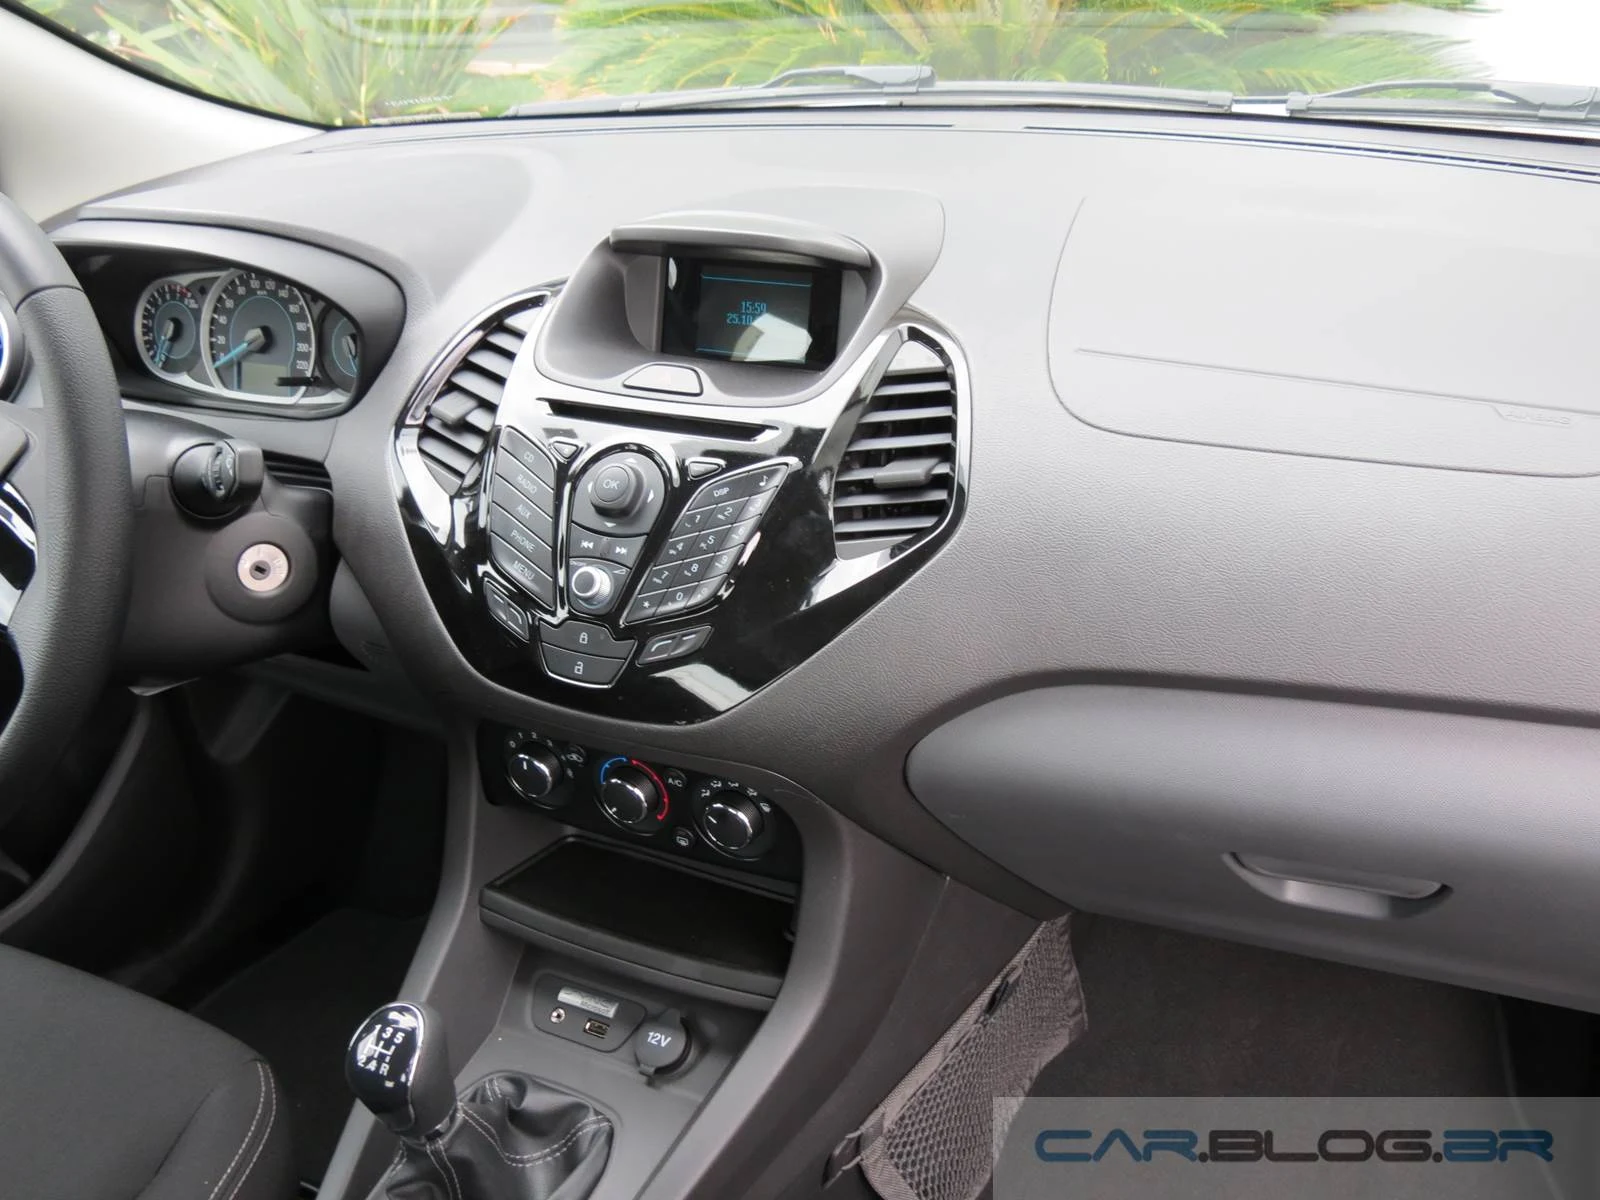 Novo Ford Ka 2015 - ruídos internos